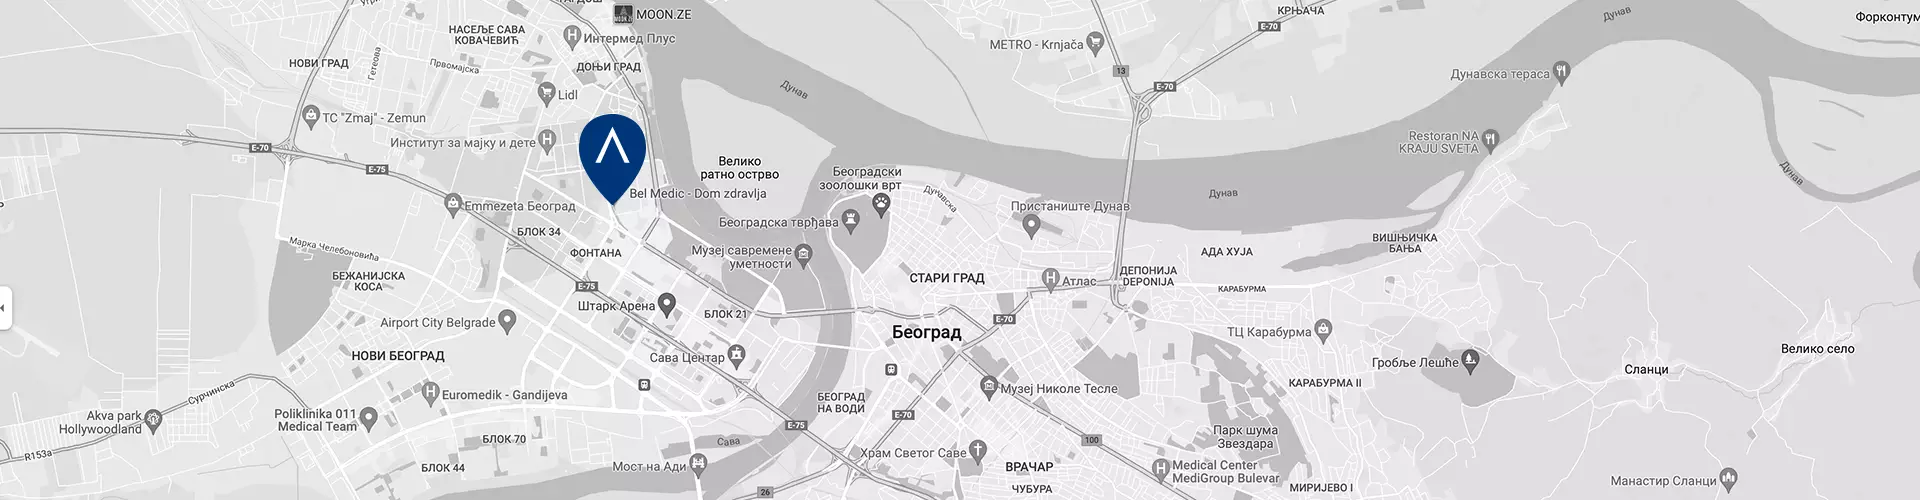 bel-medic-new-belgrade-tip-merkezi-google-maps-image.webp